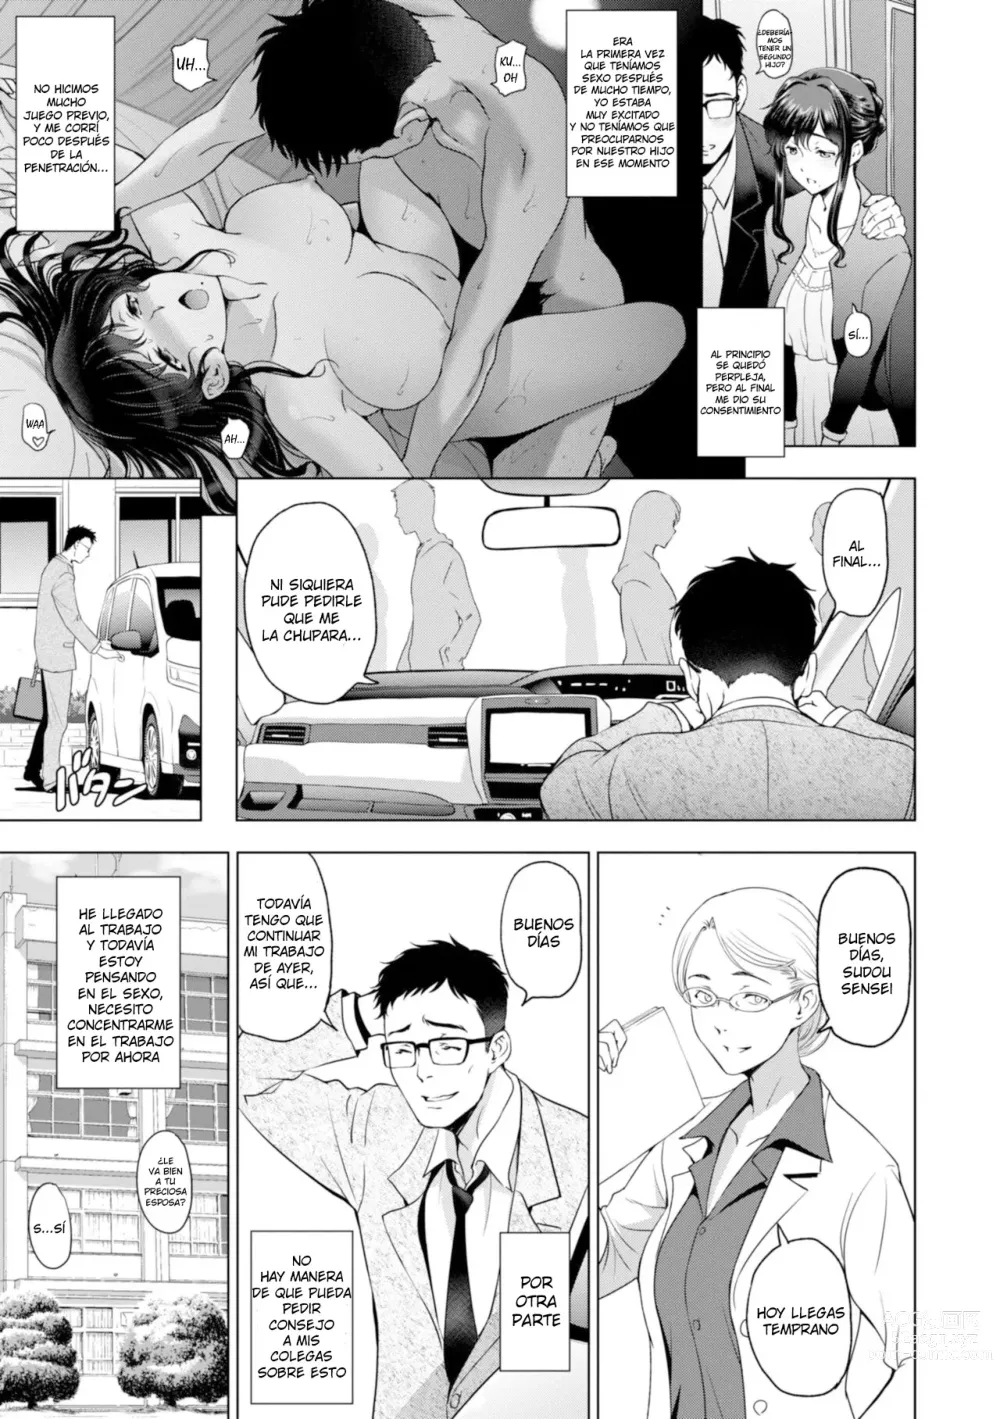 Page 5 of manga Nettori Netorare Ep.4 ~Esposa . El caso de Saori Sudou (epílogo)~